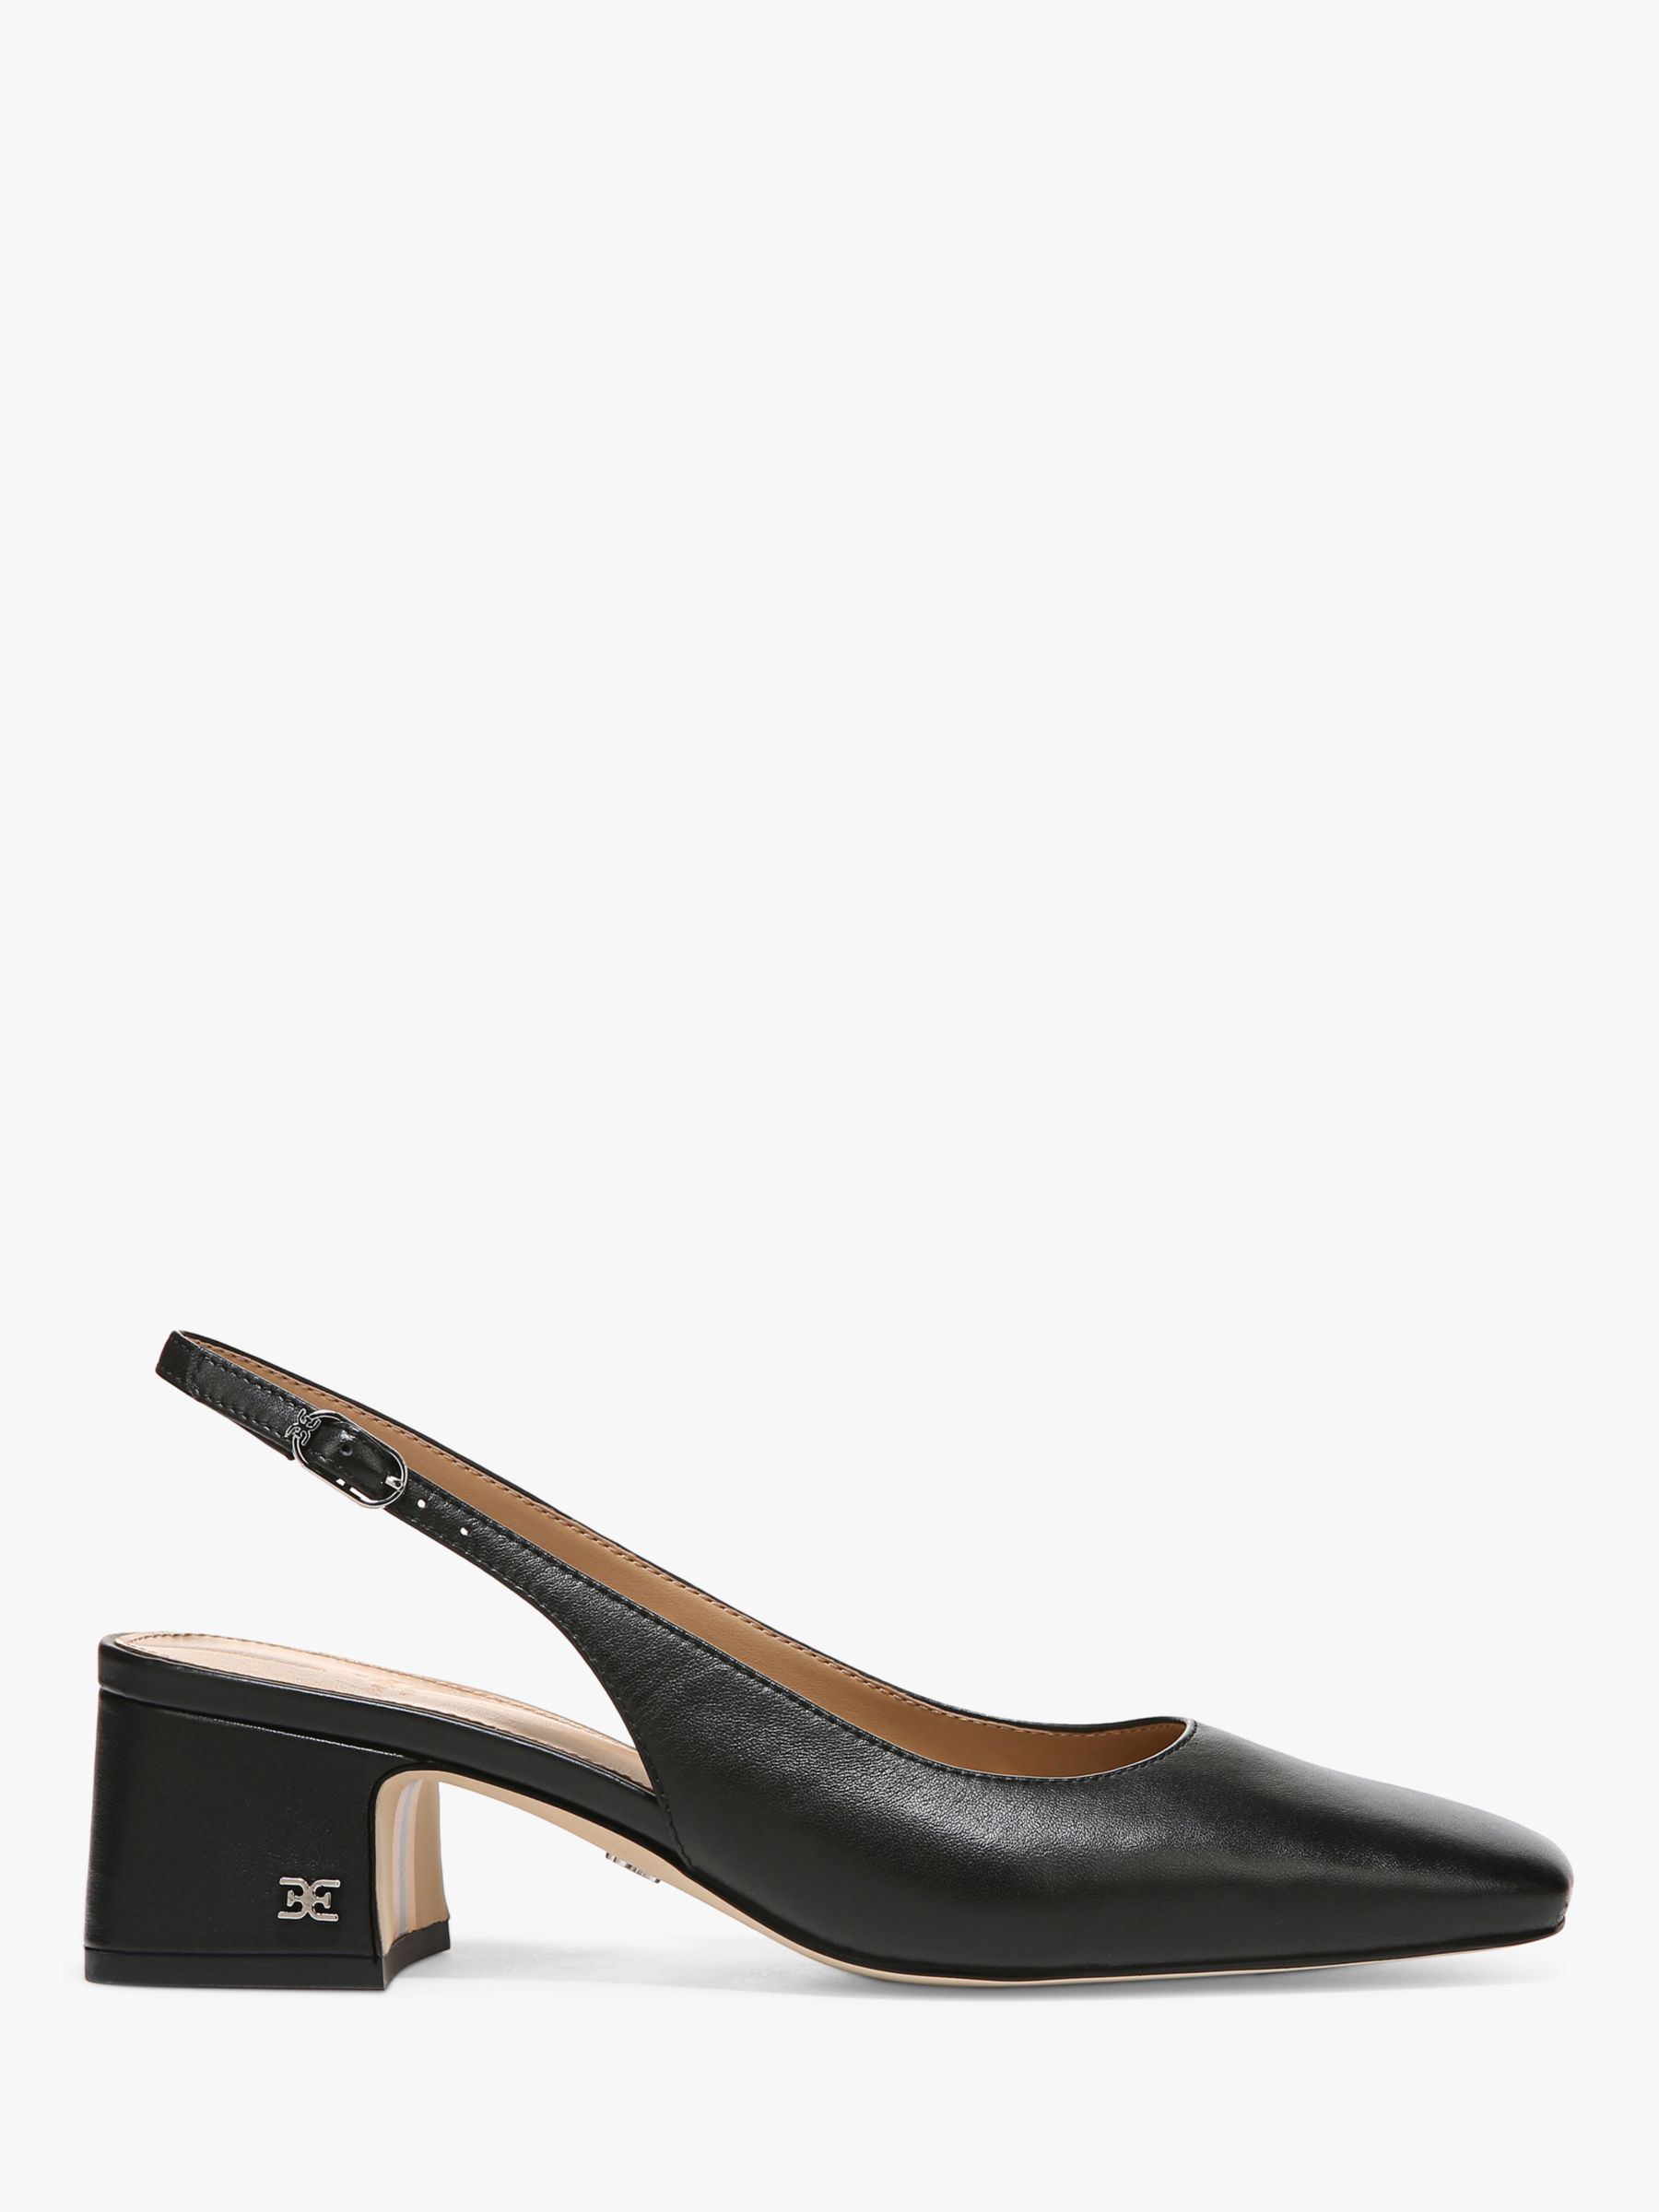 Sam Edelman Terra Leather Slingback Shoes, Black at John Lewis & Partners